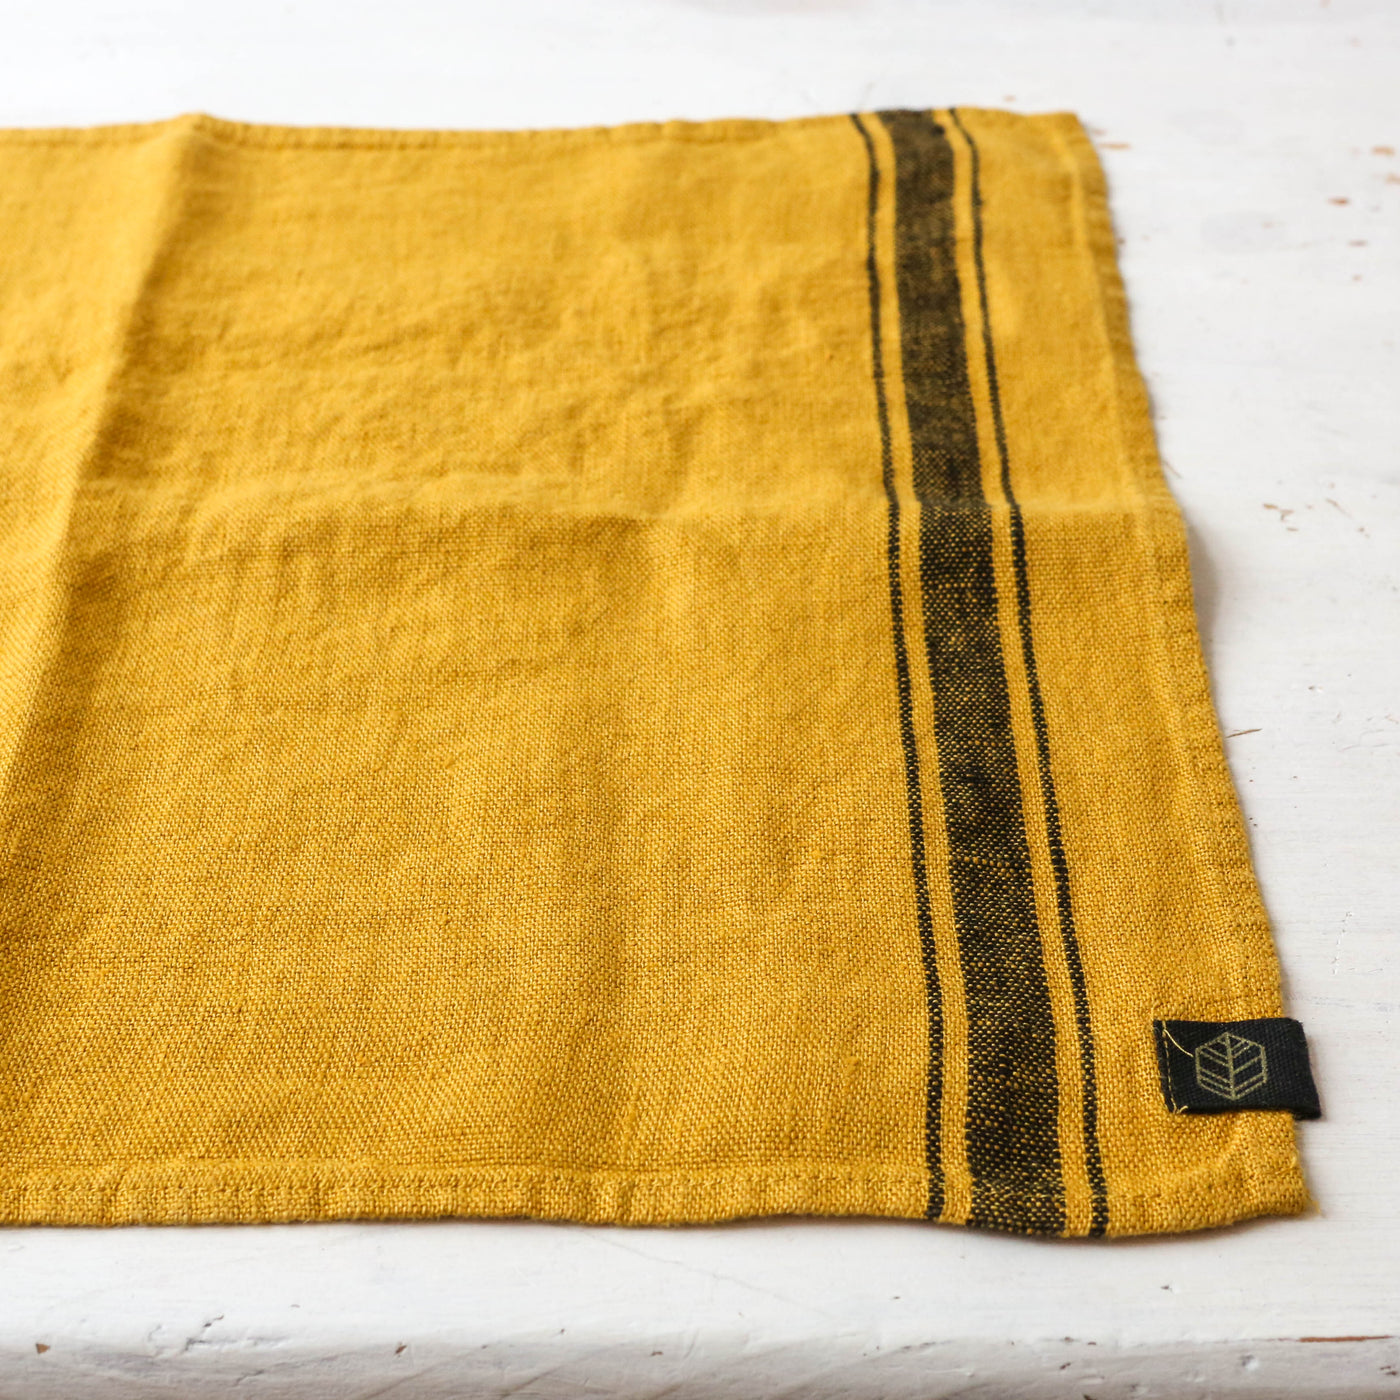 Pair of Washed Linen Rectangular Napkins or Placemats - Saffron Stripe